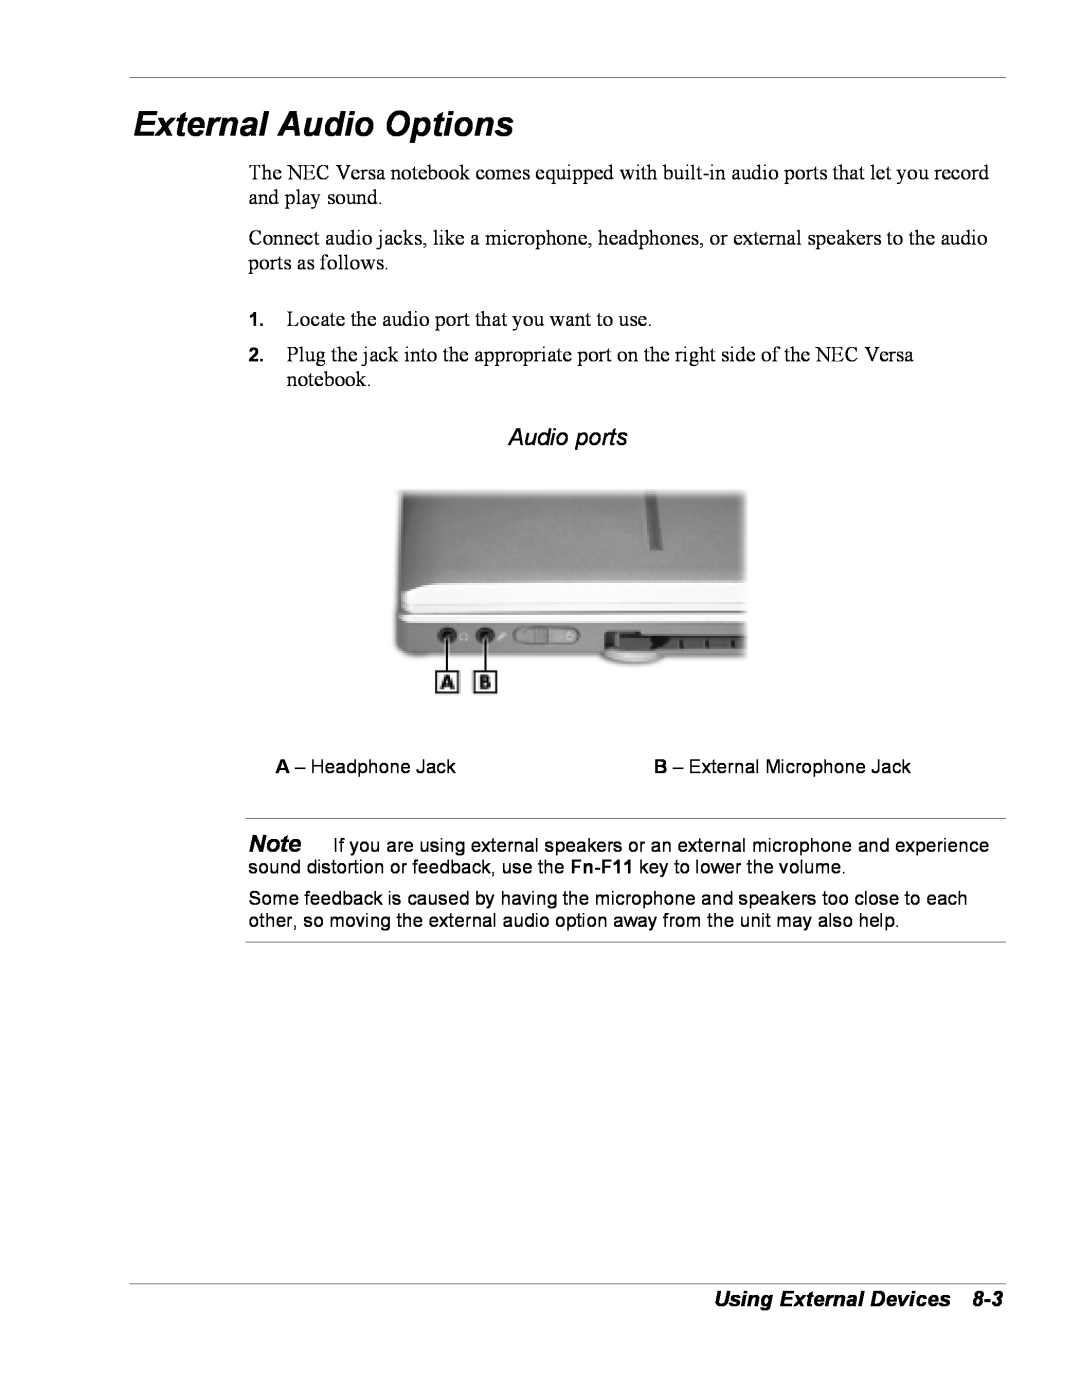 NEC Versa Series manual External Audio Options, Audio ports, Using External Devices 